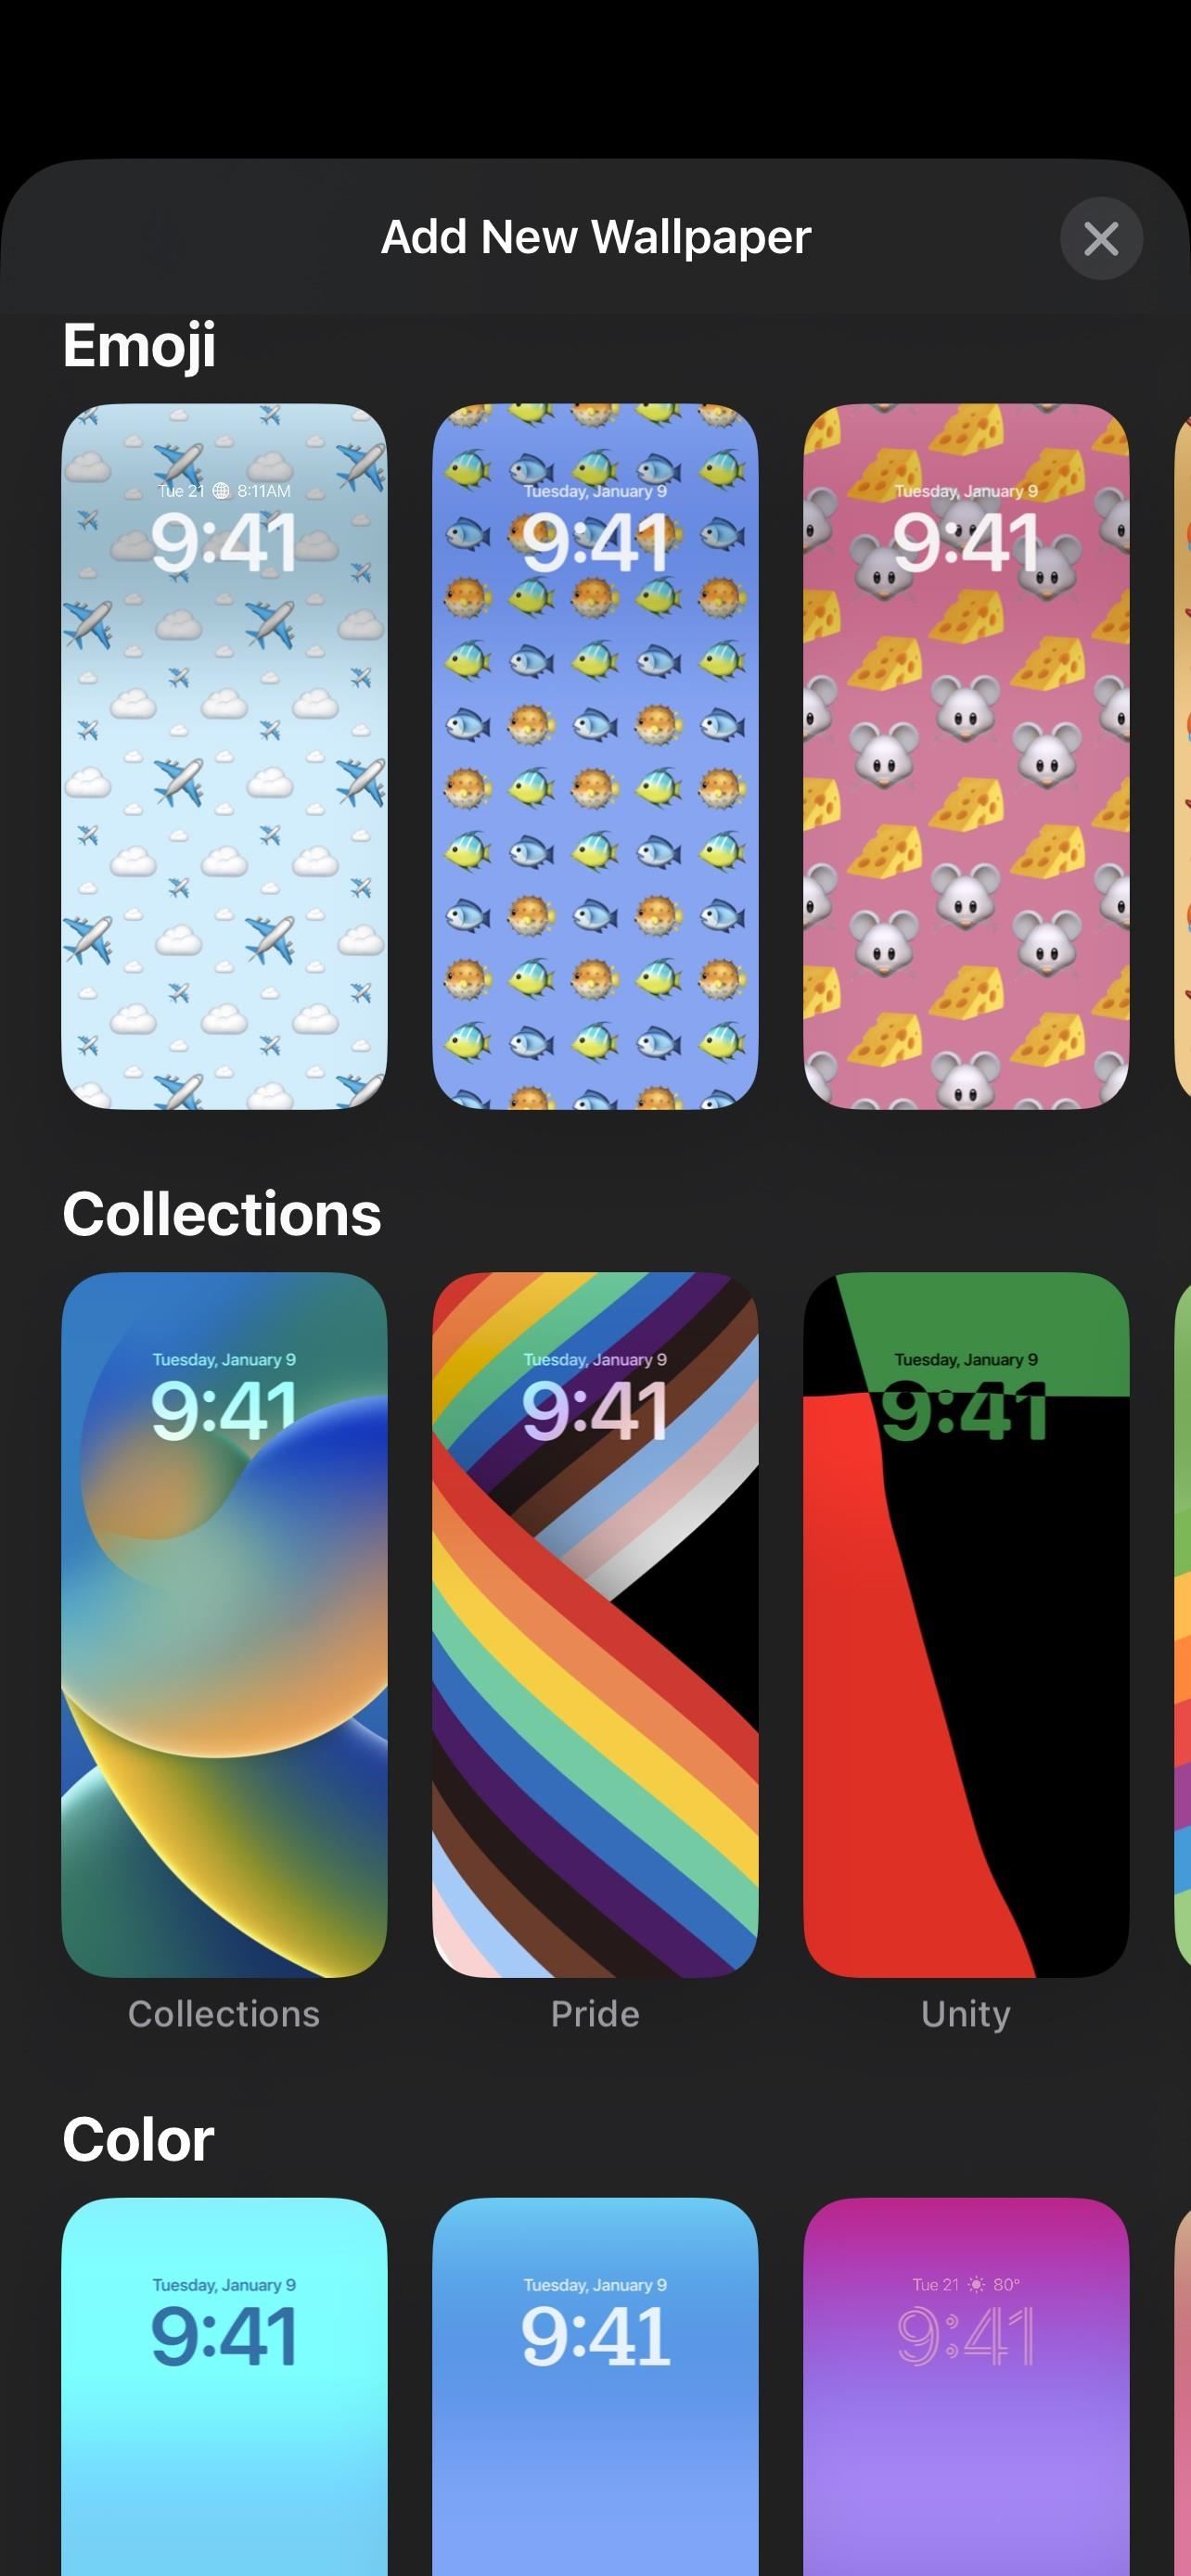 Cool Iphone Lock Screen Wallpapers